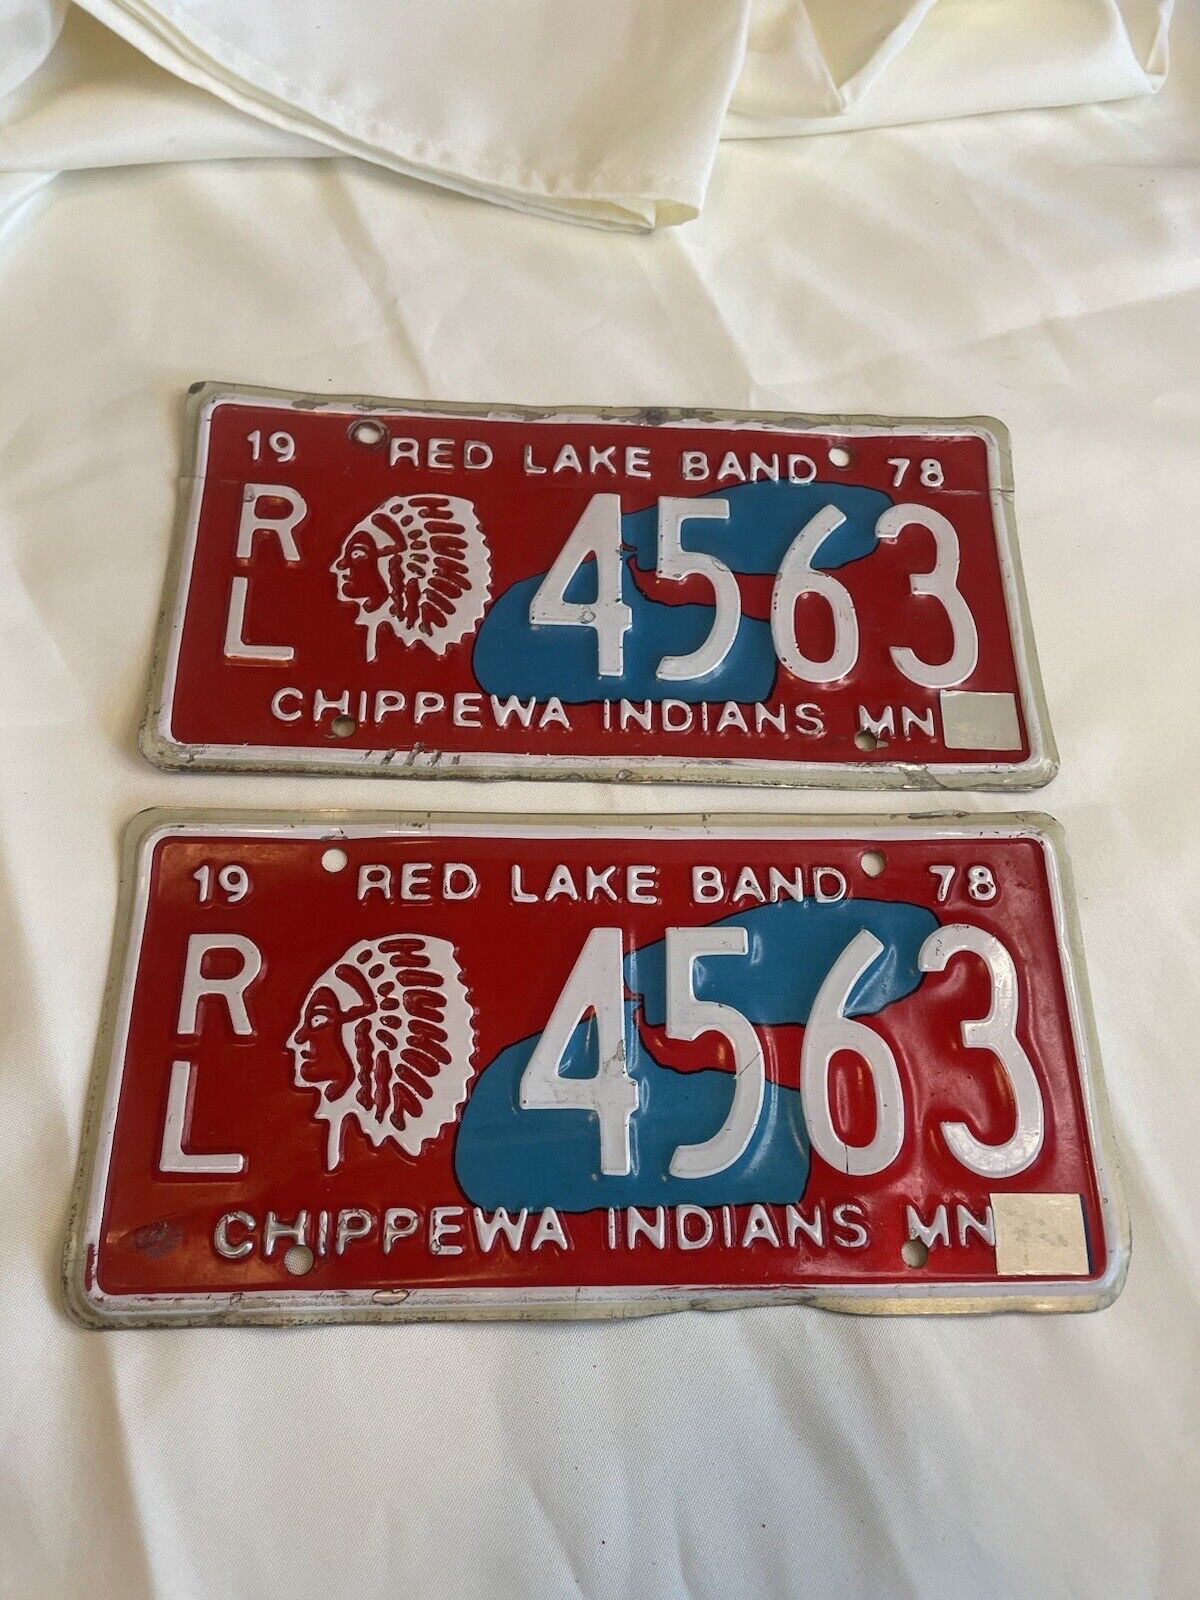 Vintage 1978 Minnesota Red Lake Band Chippewa Indians License Plates 4563 SET